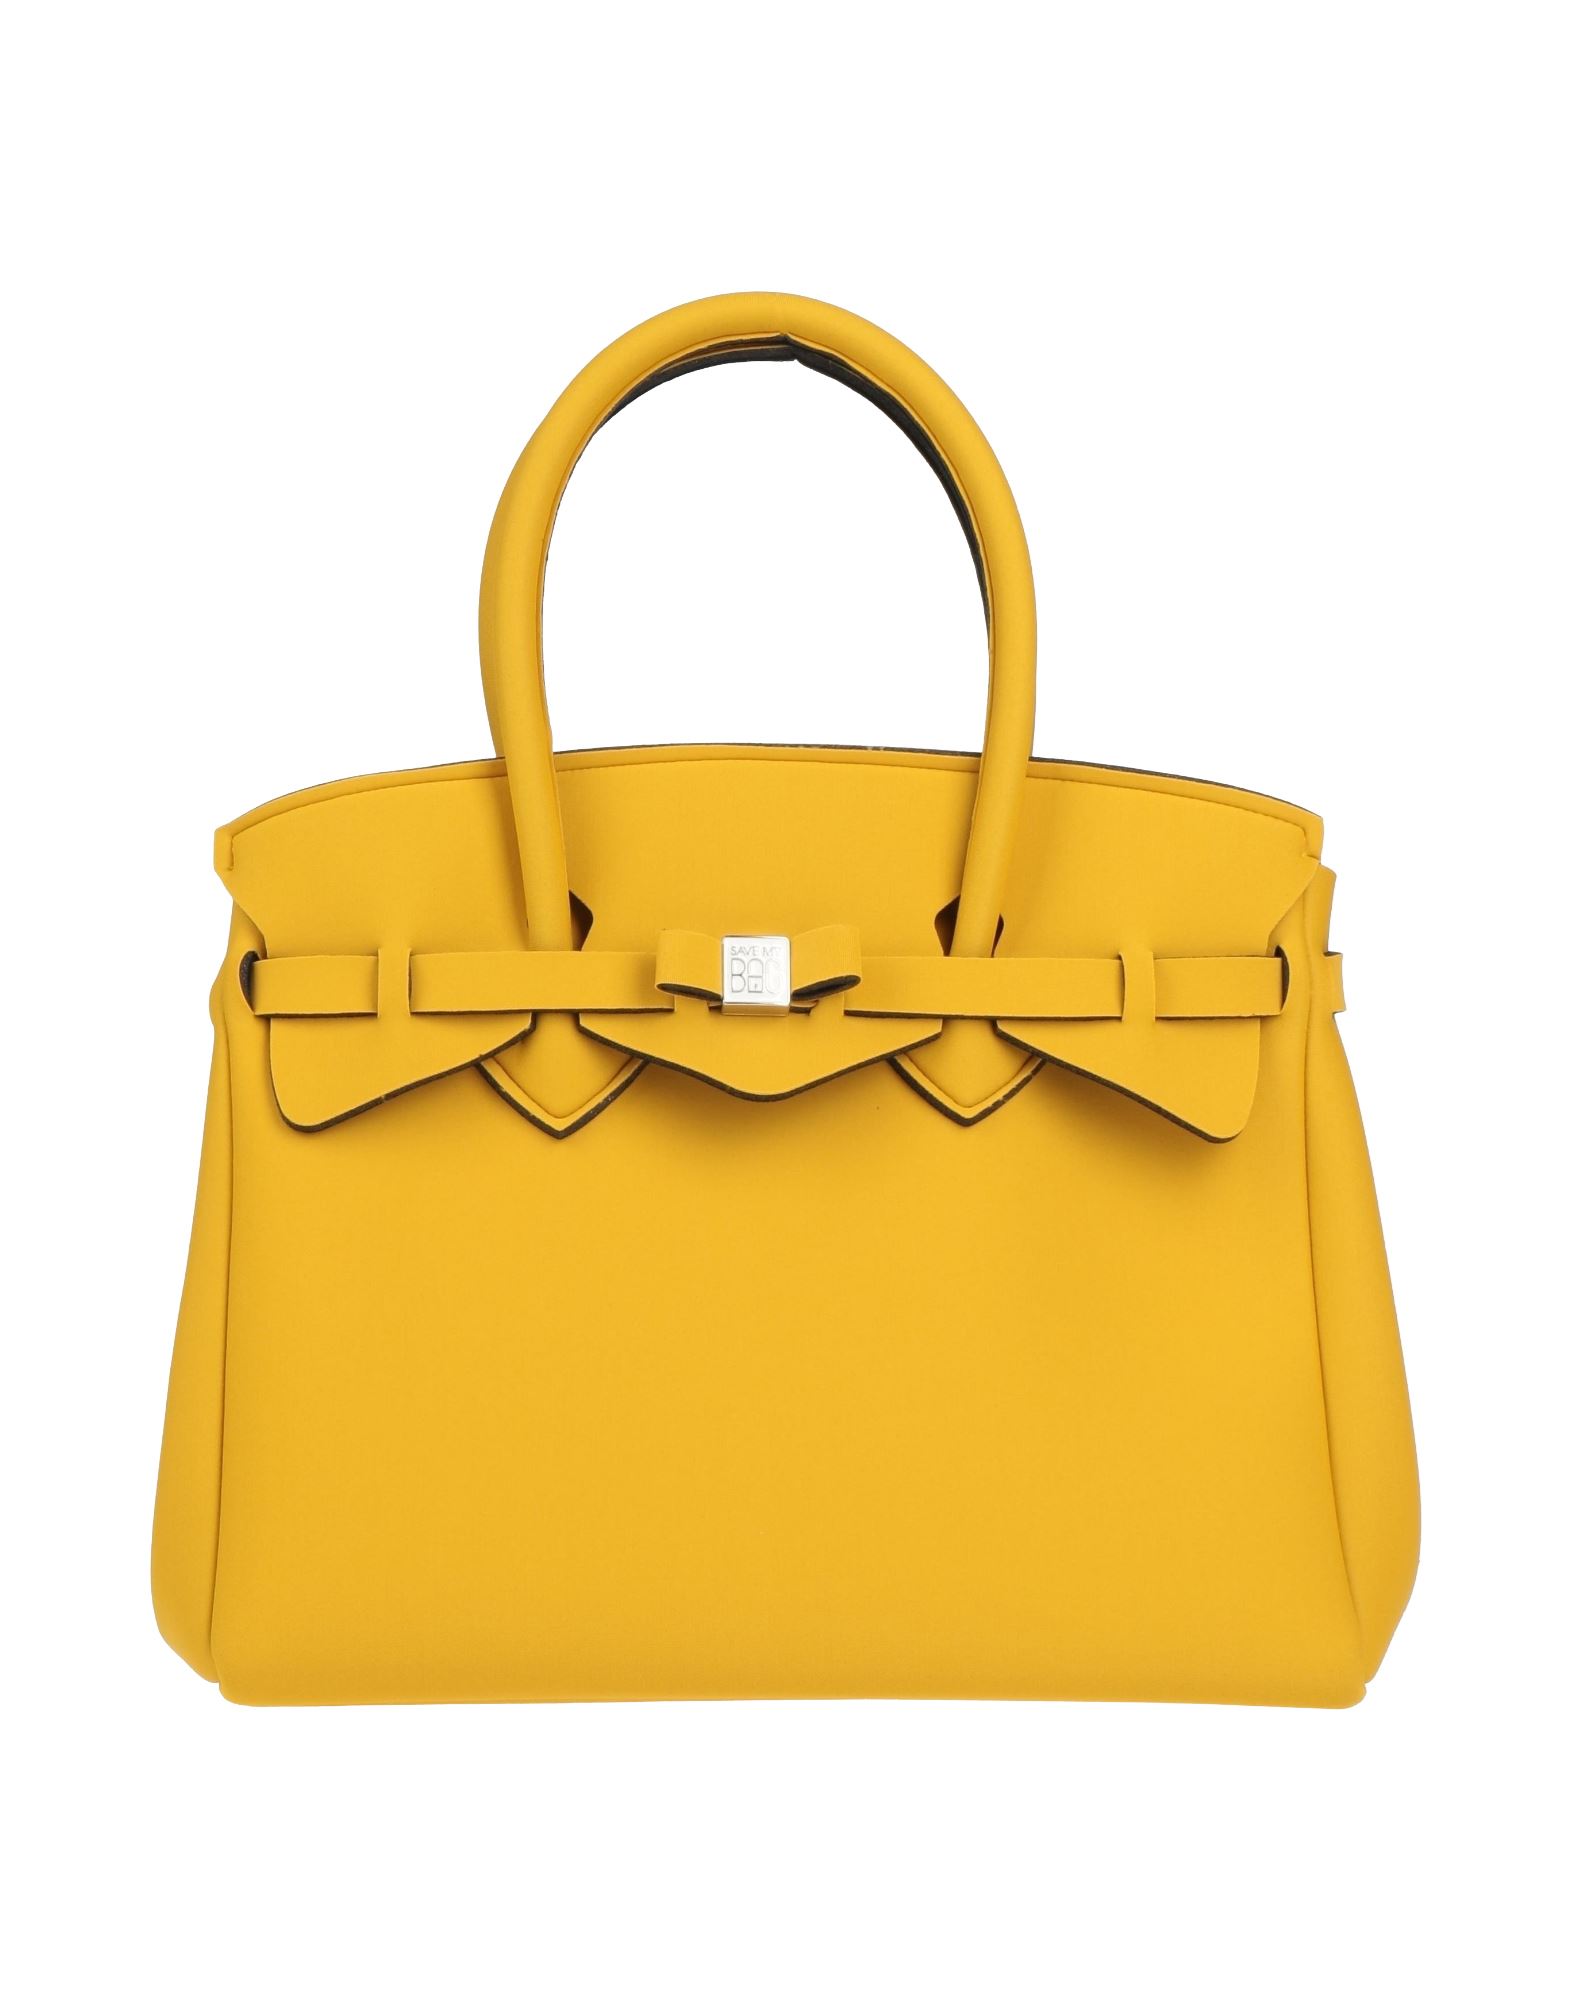 Save My Bag Handbags In Yellow